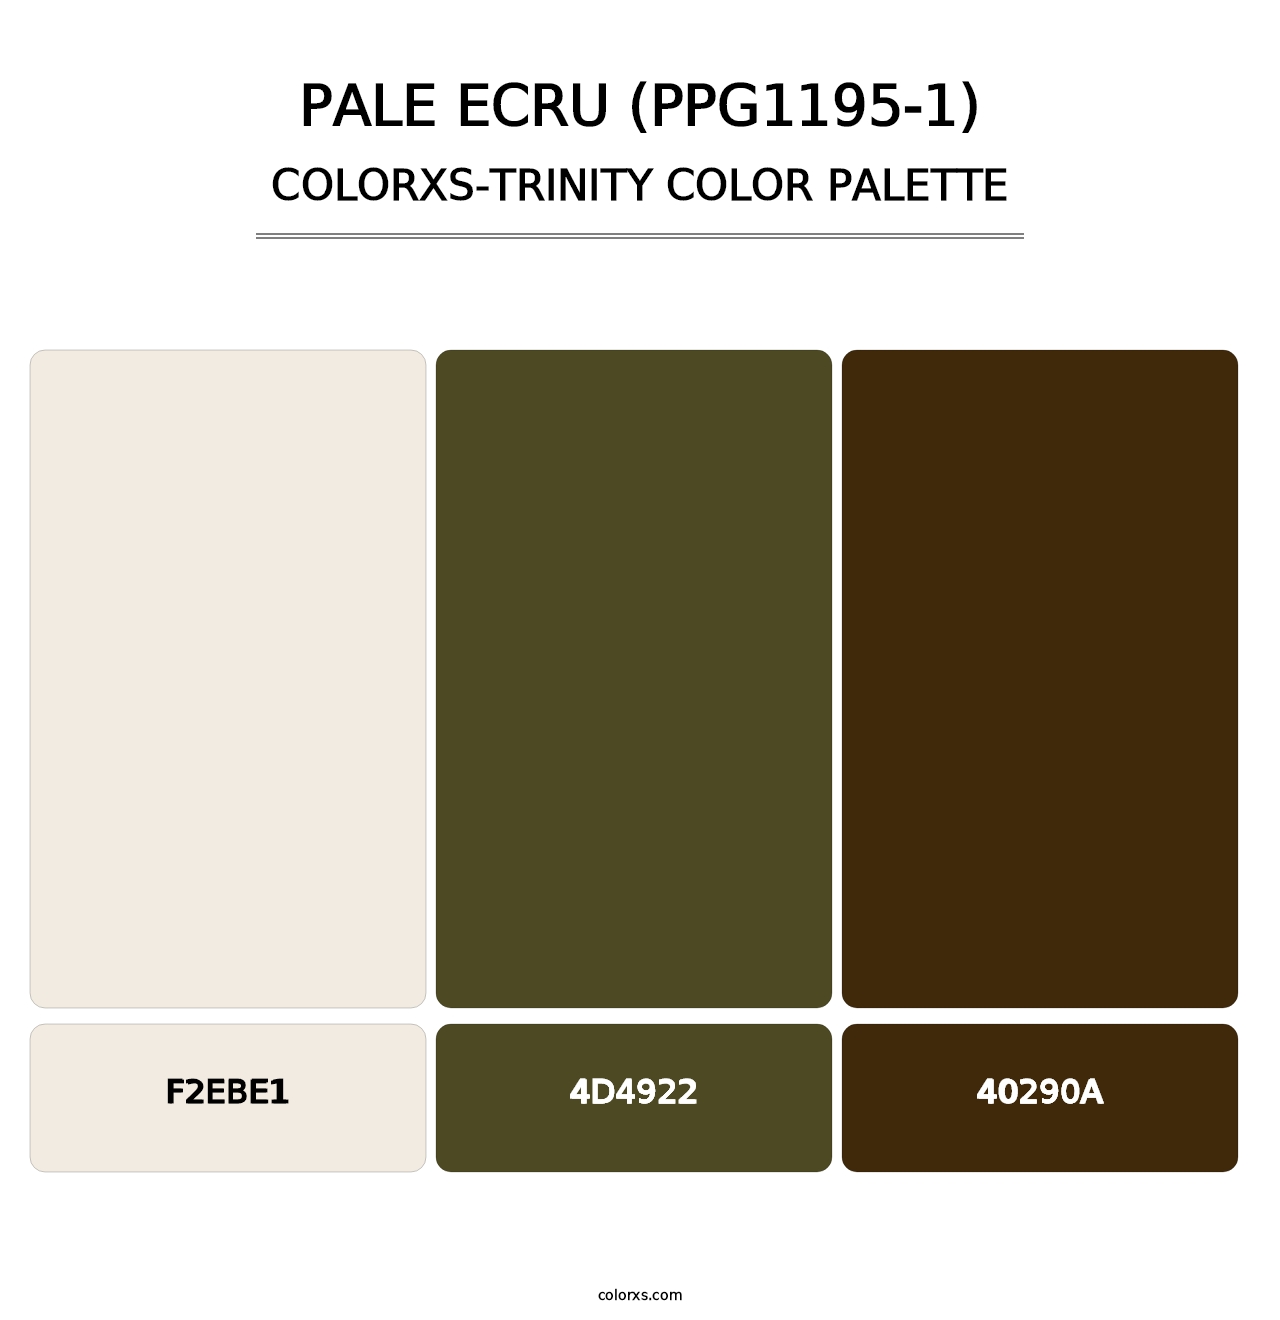 Pale Ecru (PPG1195-1) - Colorxs Trinity Palette